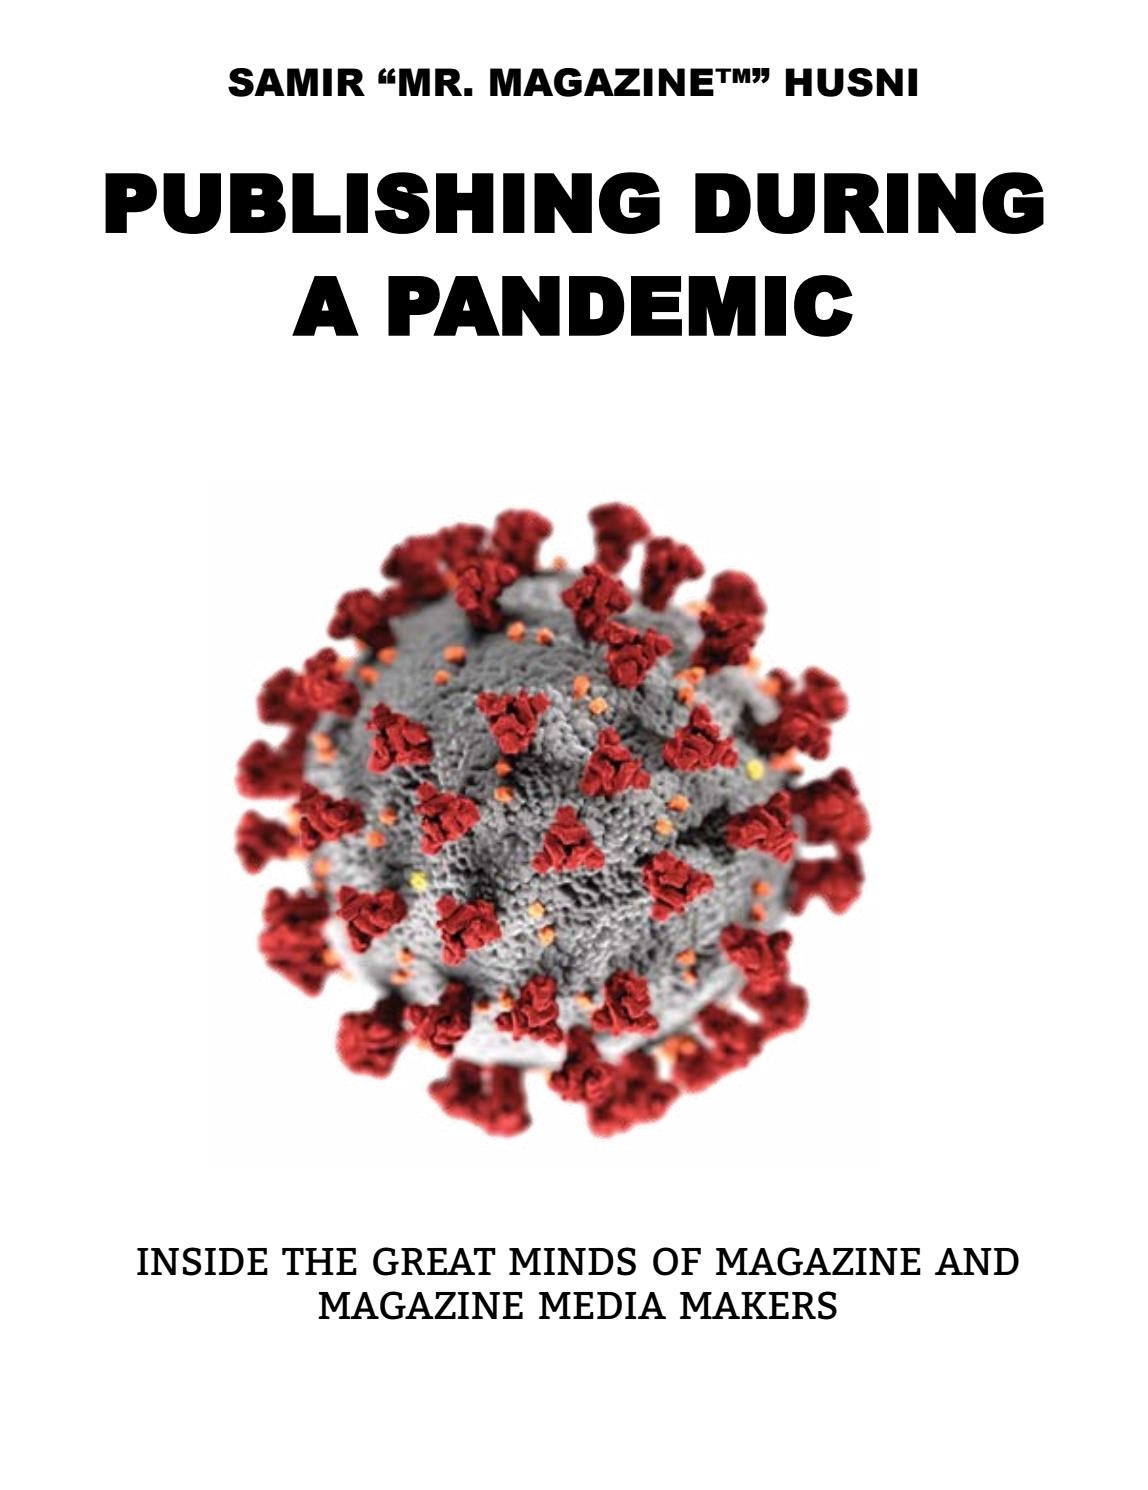 Publishing During A Pandemic by Samir "Mr. Magazine" Husni